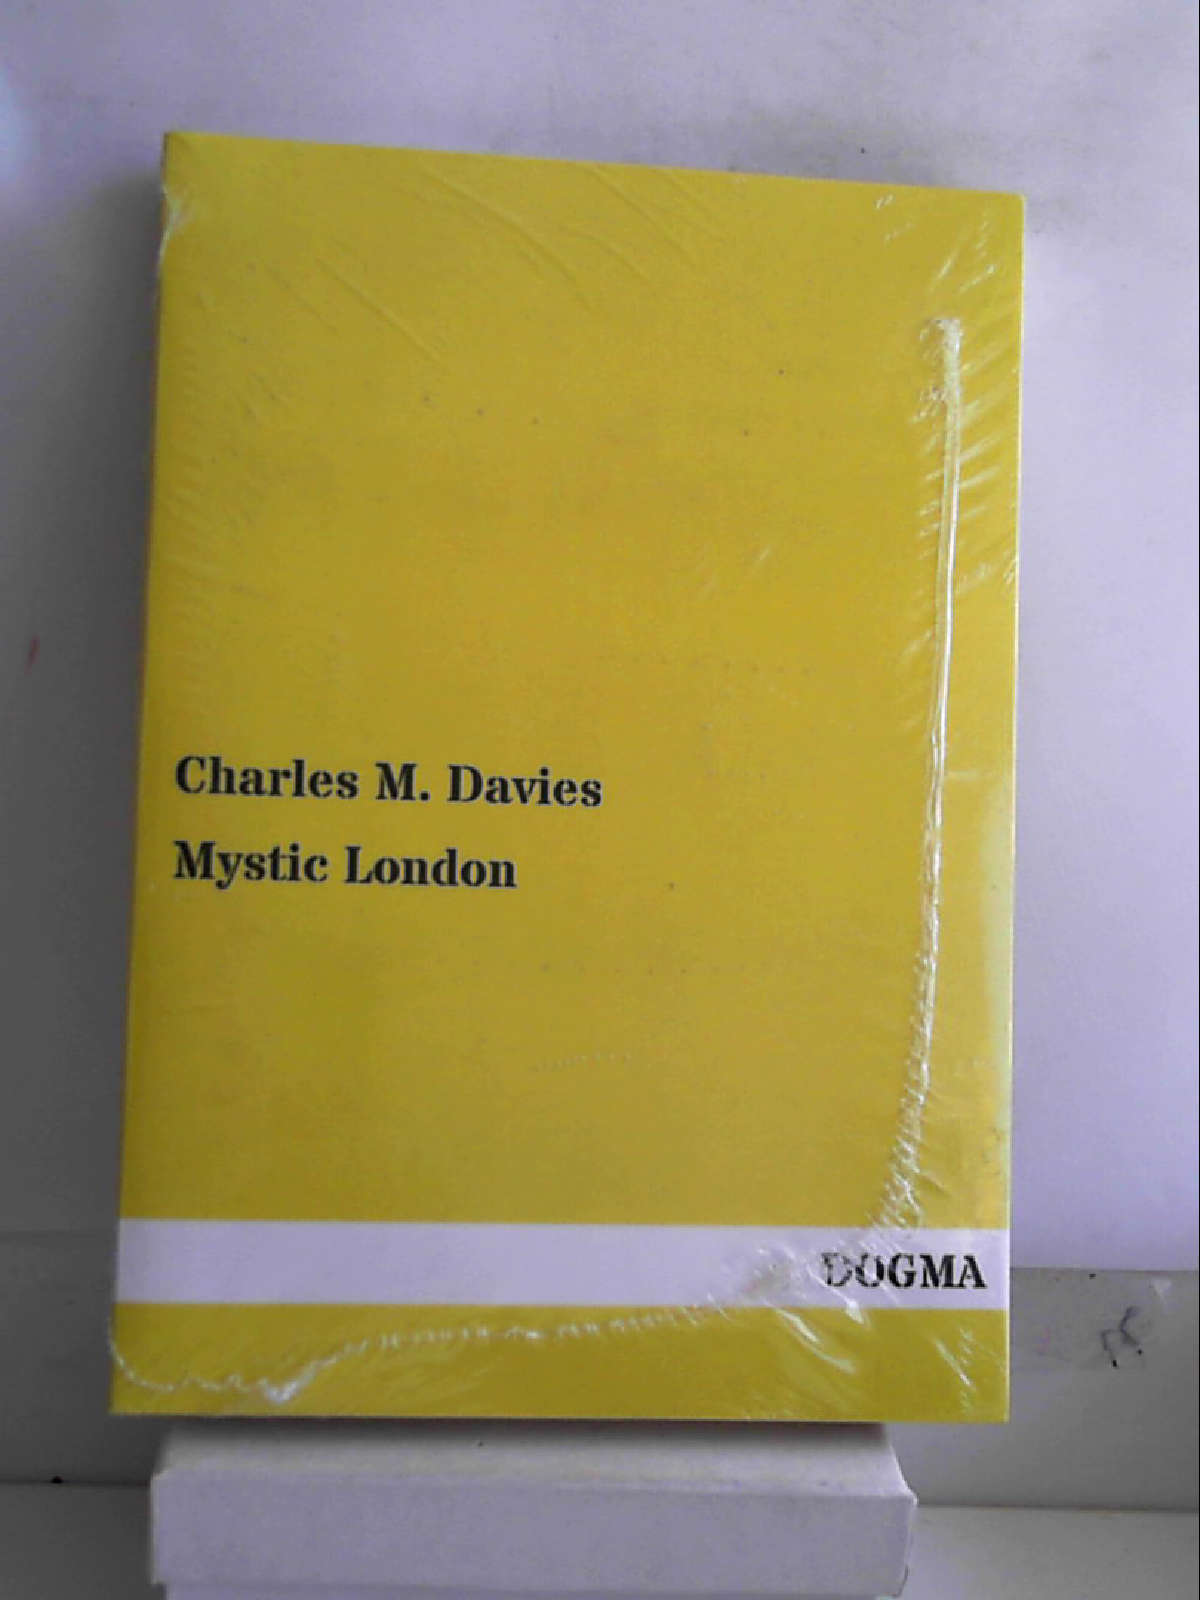 Mystic London: Spiritualism in the Metropolis [Paperback] [Jan 06, 2013] Davies, Charles M. - Charles M. Davies